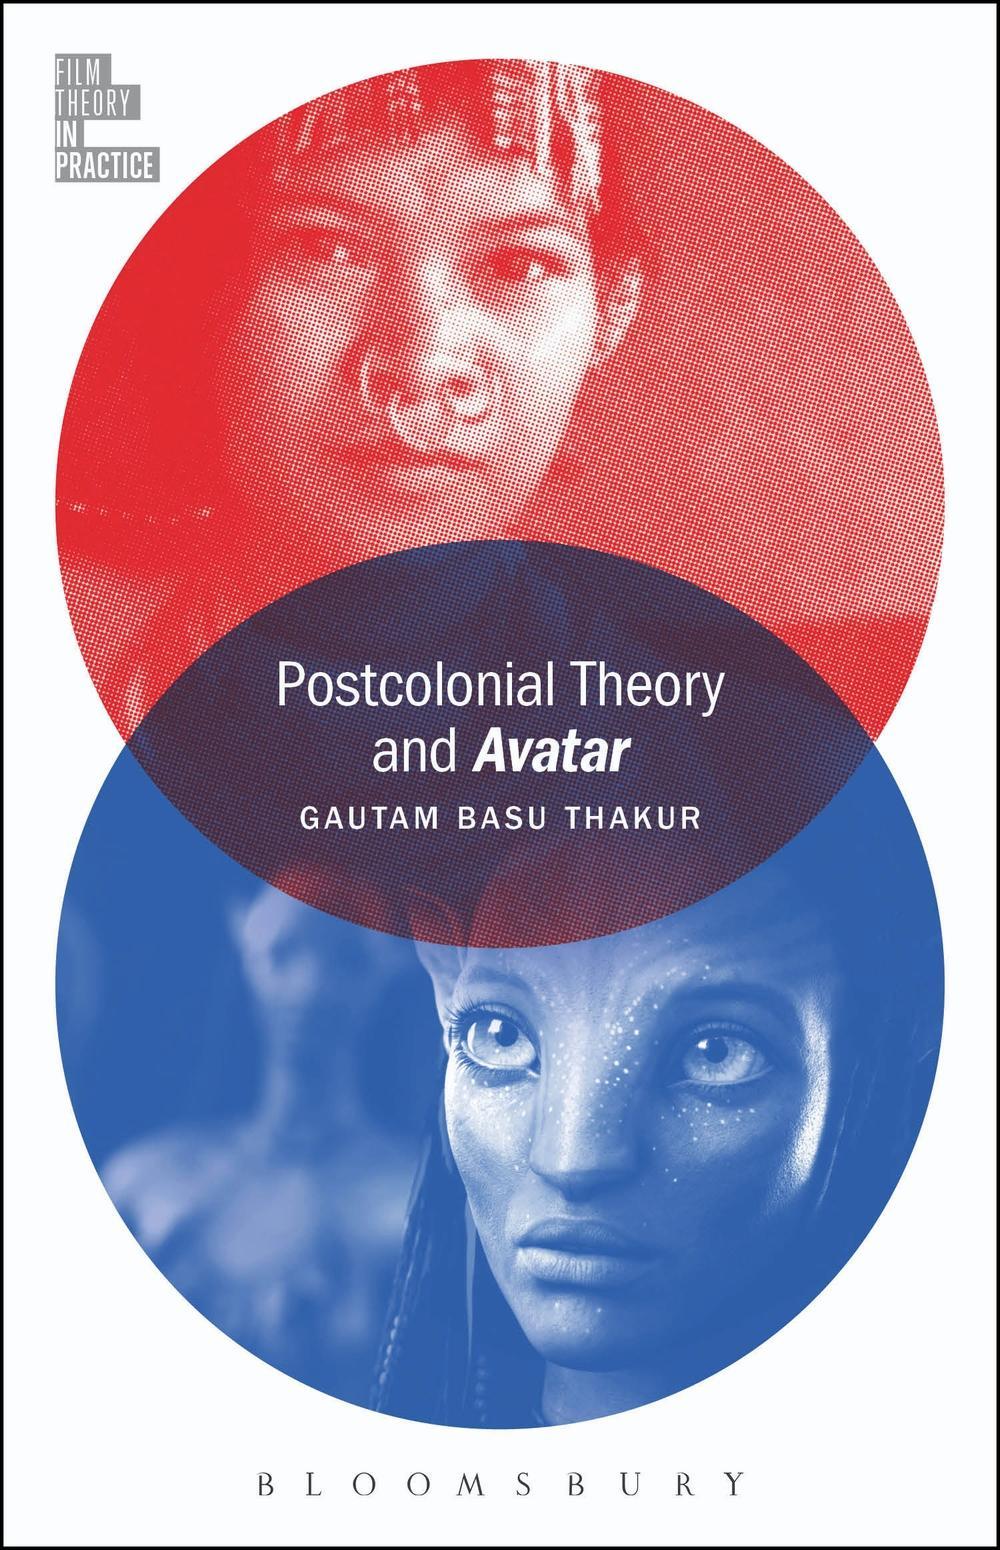 Postcolonial Theory and Avatar - Gautam Basu